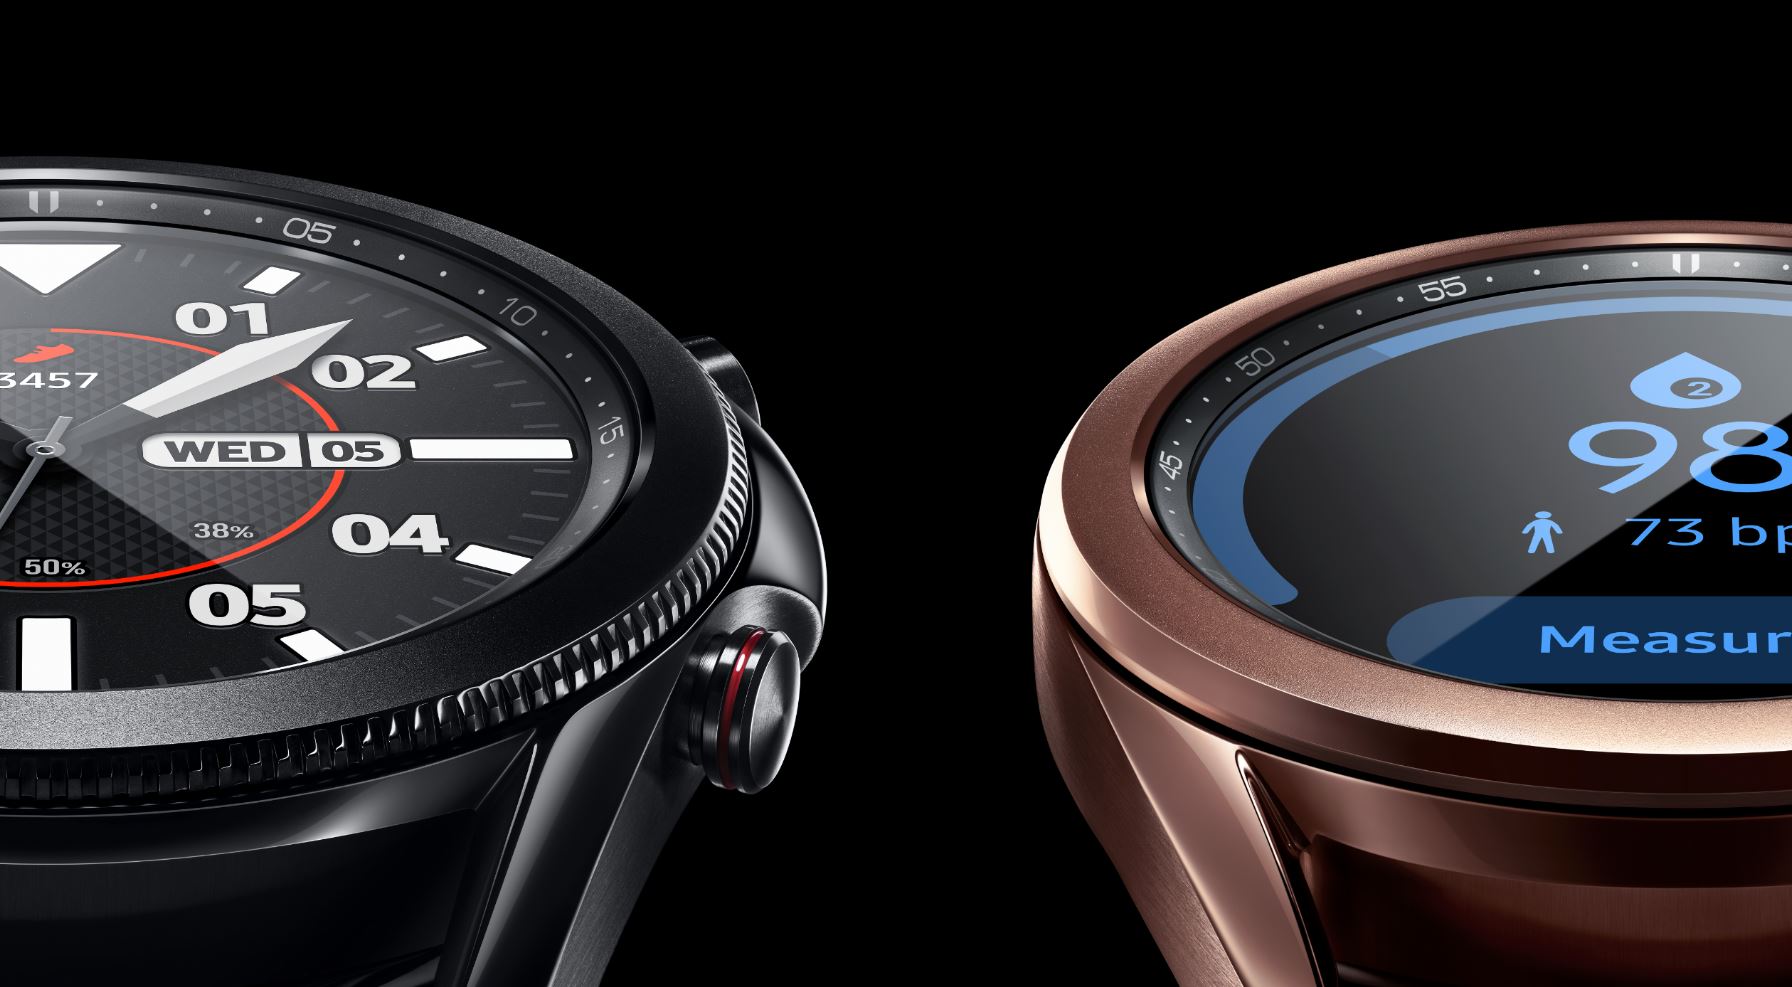 Samsung Galaxy Watch 3 Smartwatch